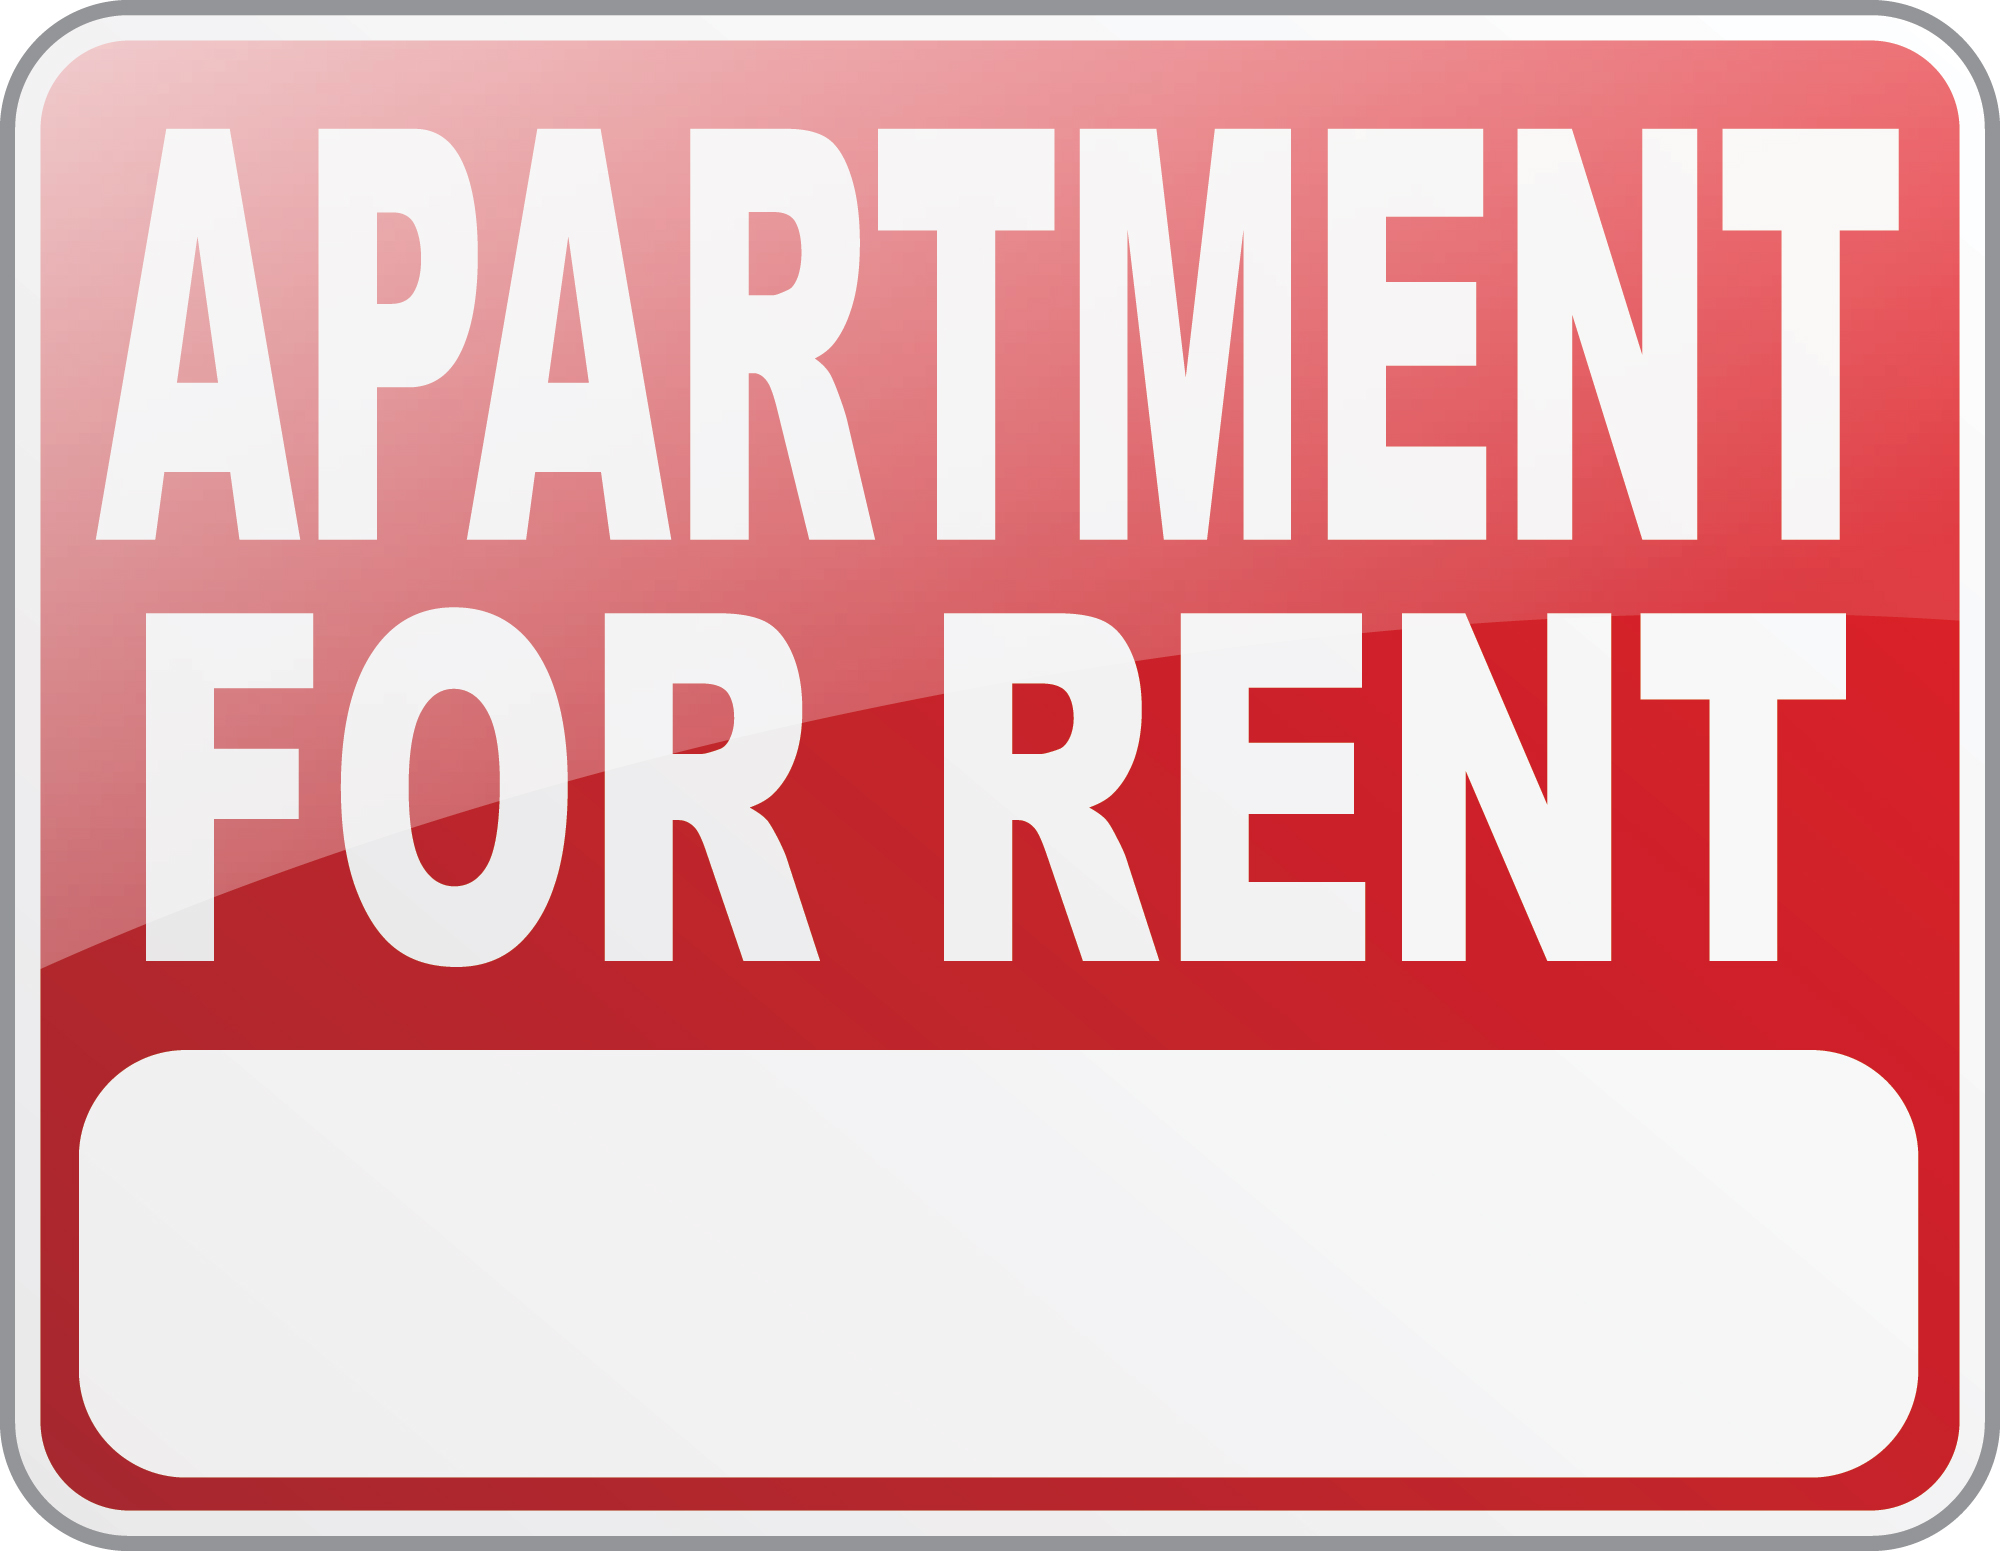 Residential Rental Property Management For Rent Jpg